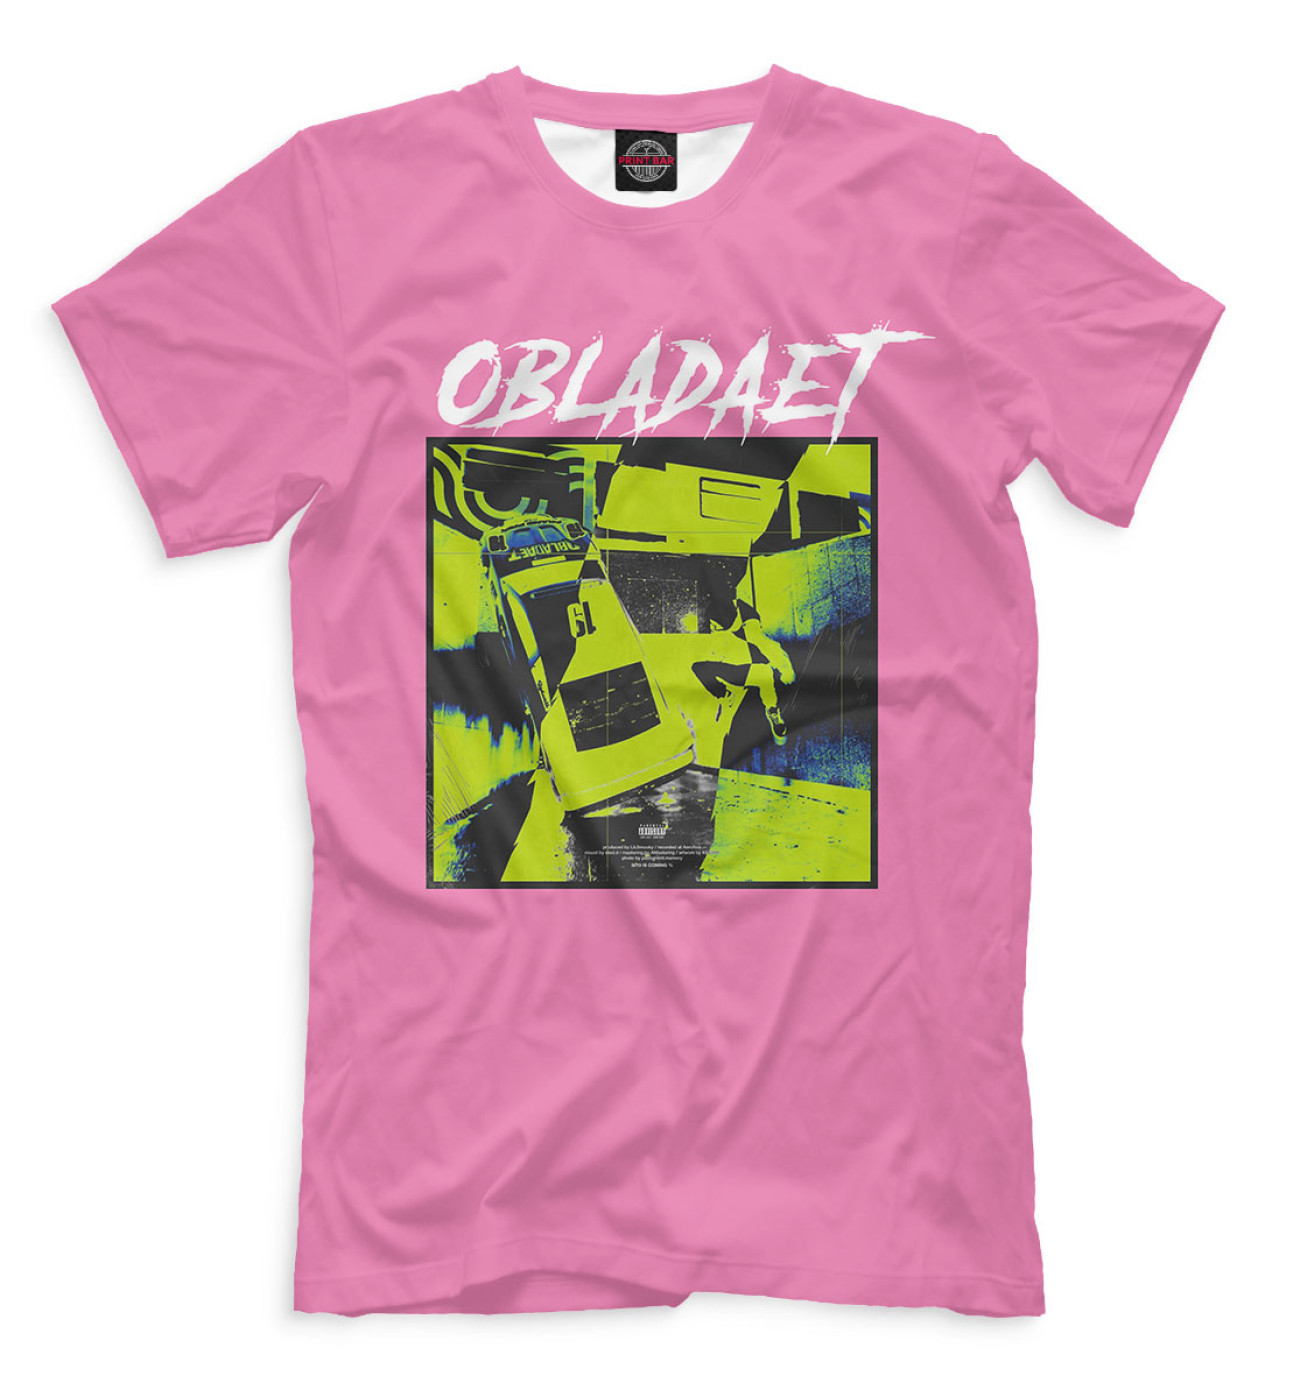 Мужская Футболка Obladaet pink, артикул: OBT-115422-fut-2